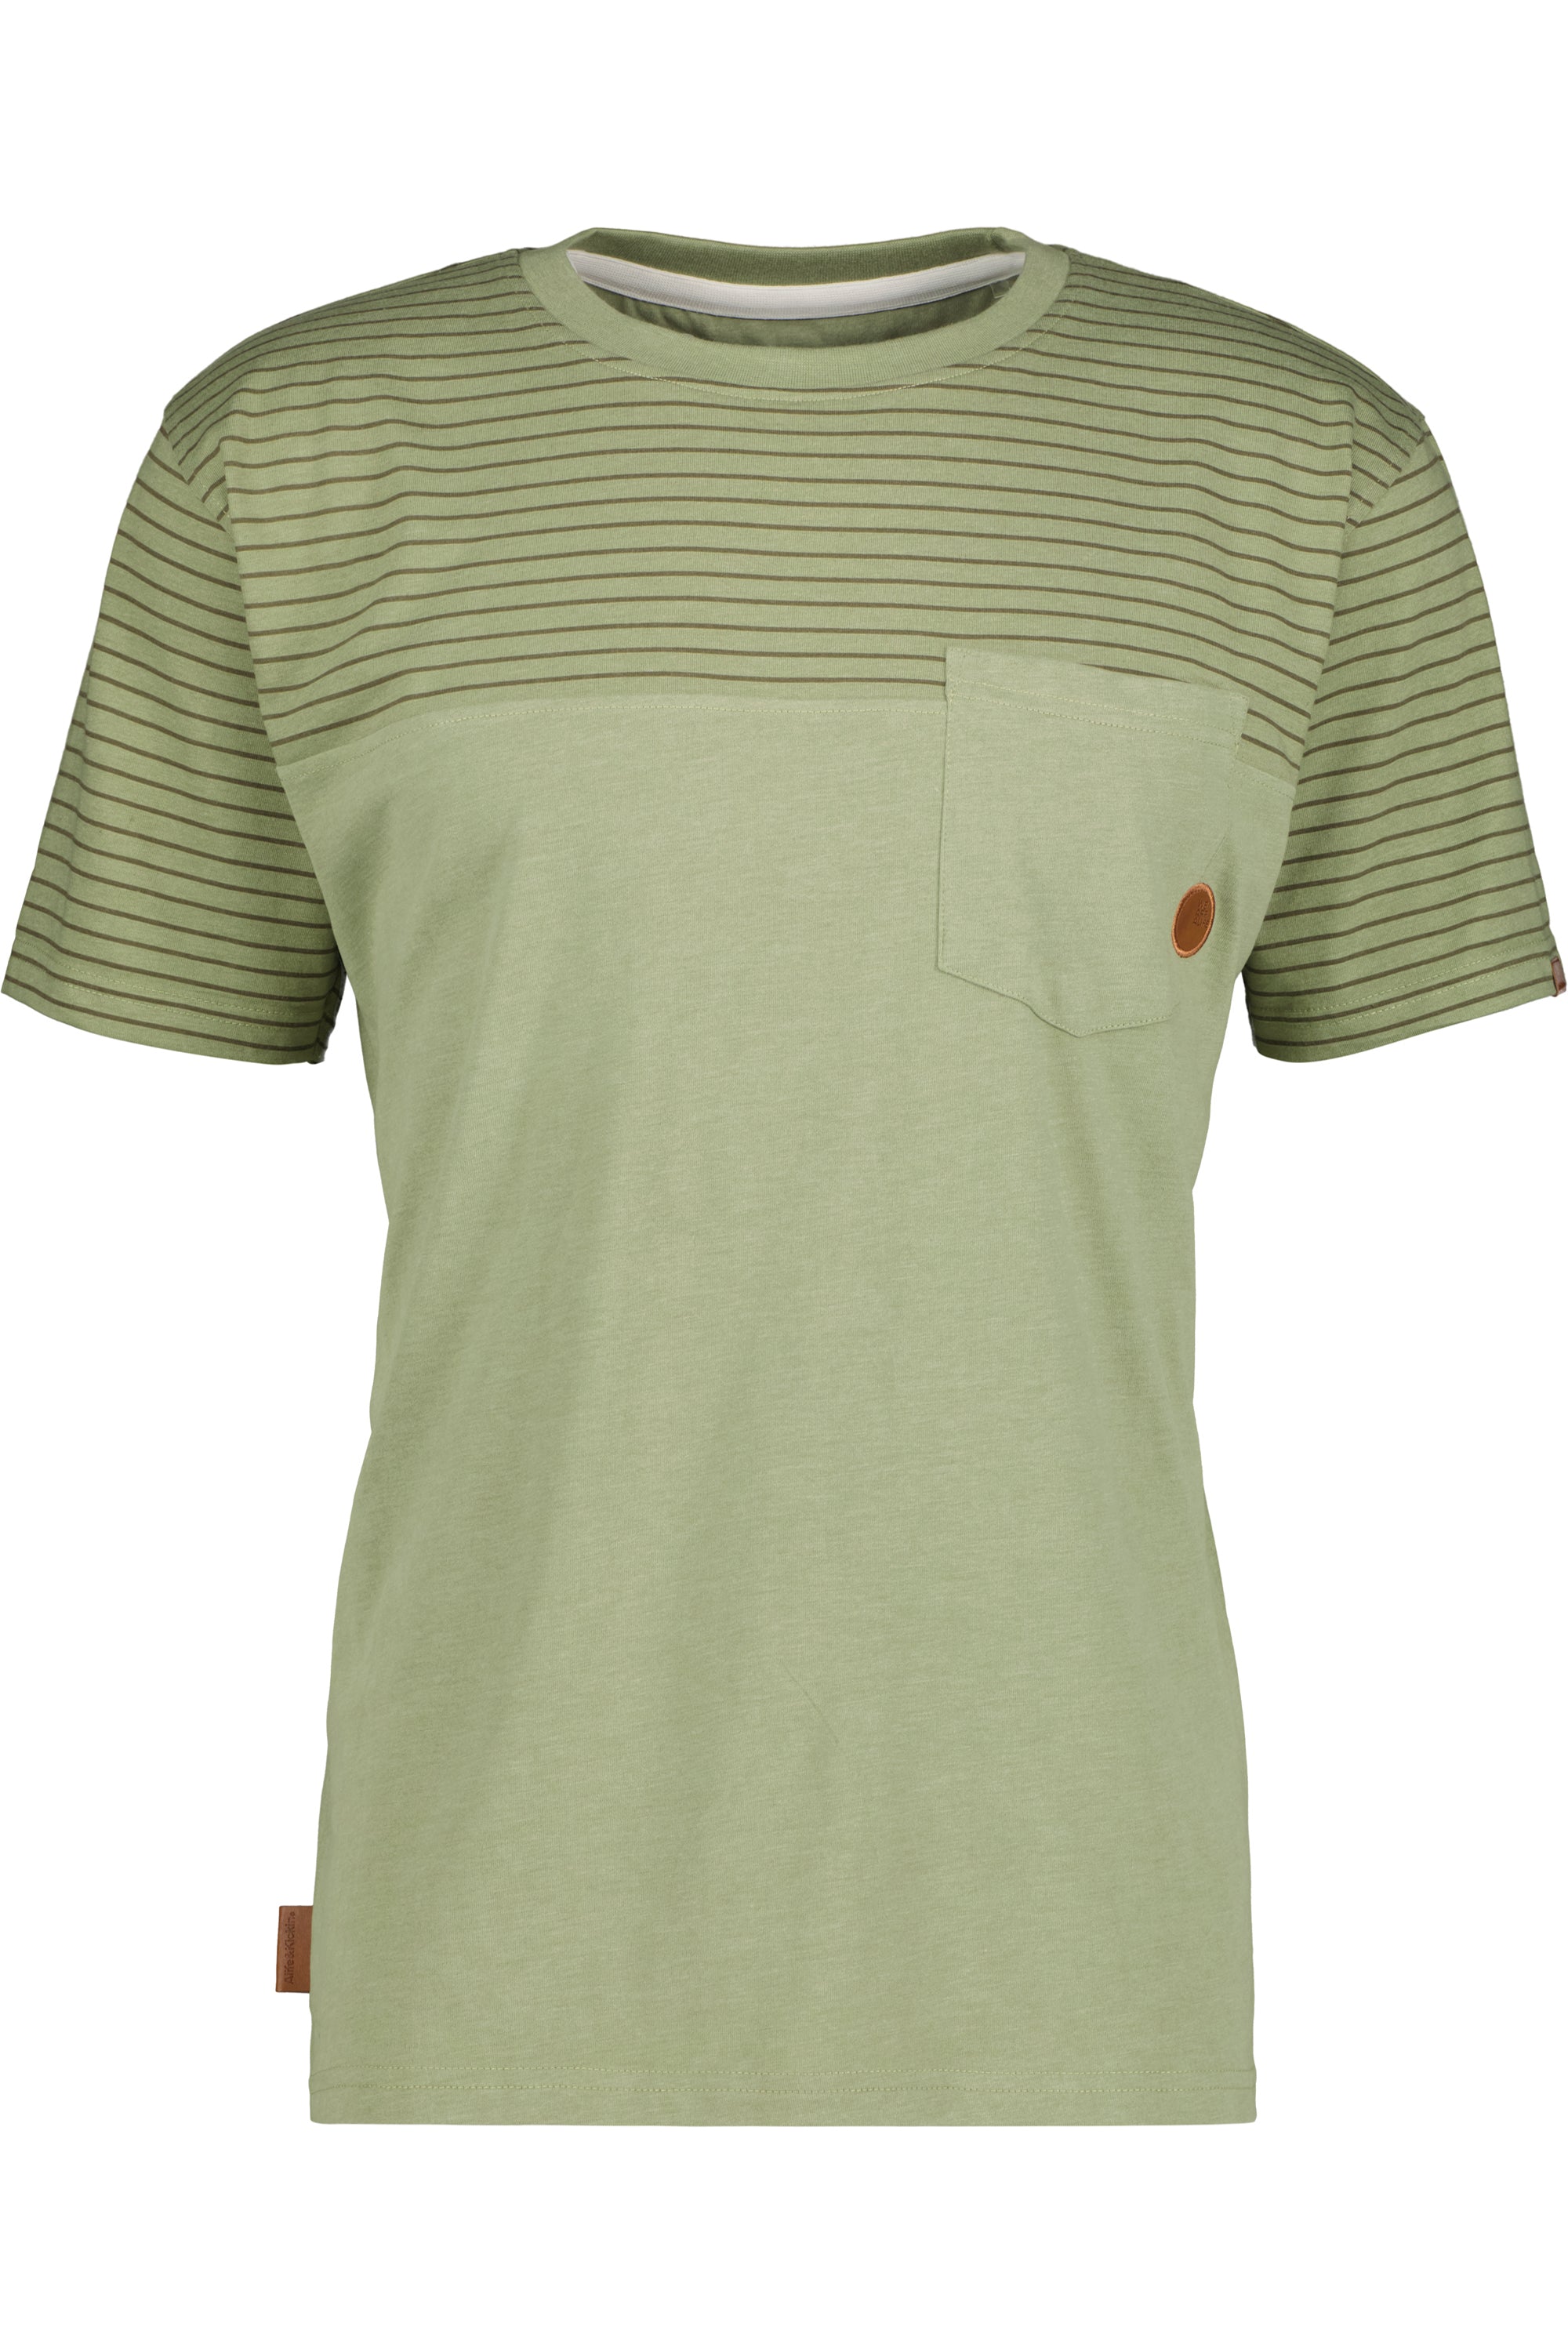 T-Shirt Herren im Streifenlook LeopoldAK Z Grün